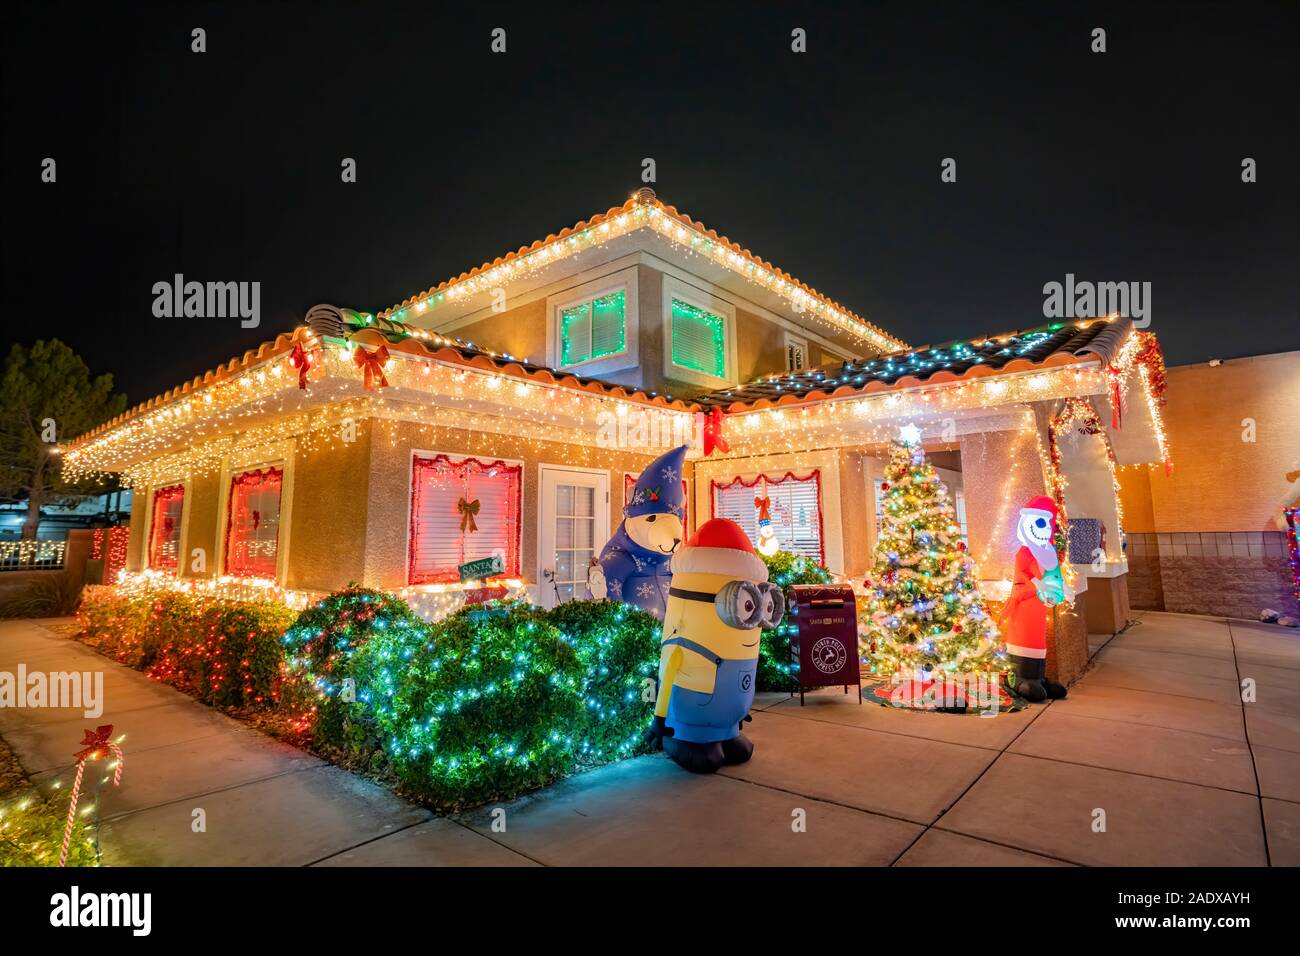 Las Vegas, DEC 2: Christmas lights, decoration of a house on DEC 2, 2019 at Las Vegas, Henderson Stock Photo